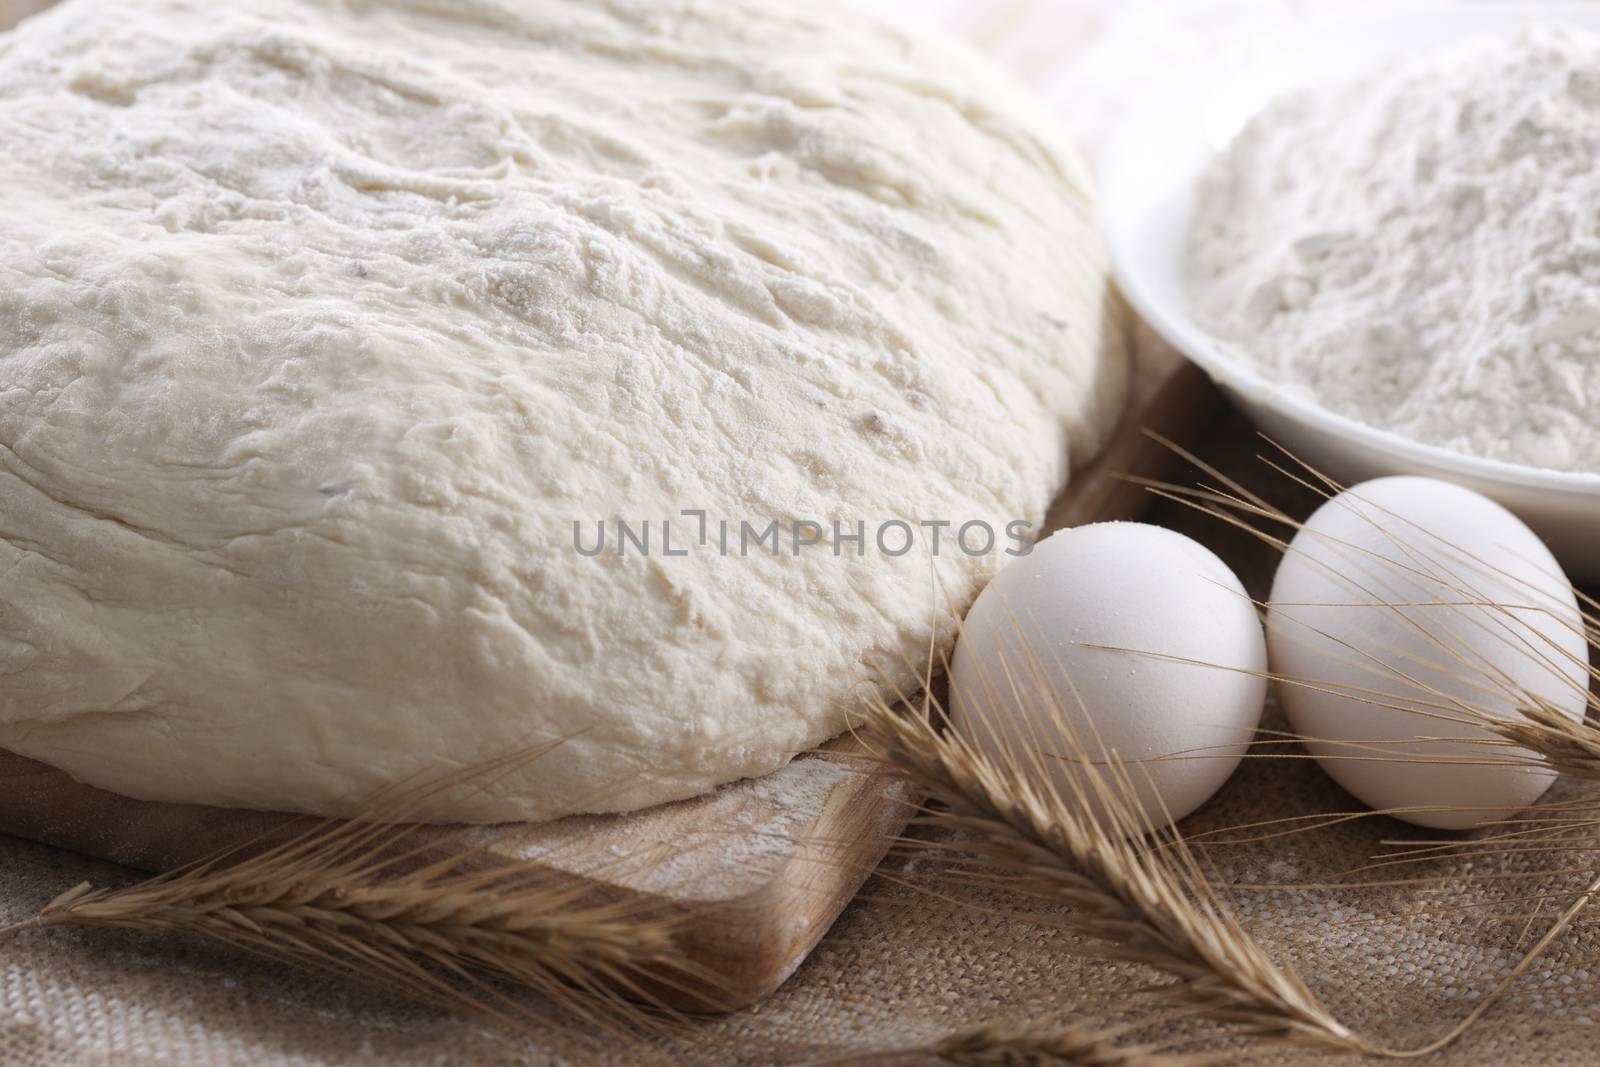 Baking fresh bread background, dough